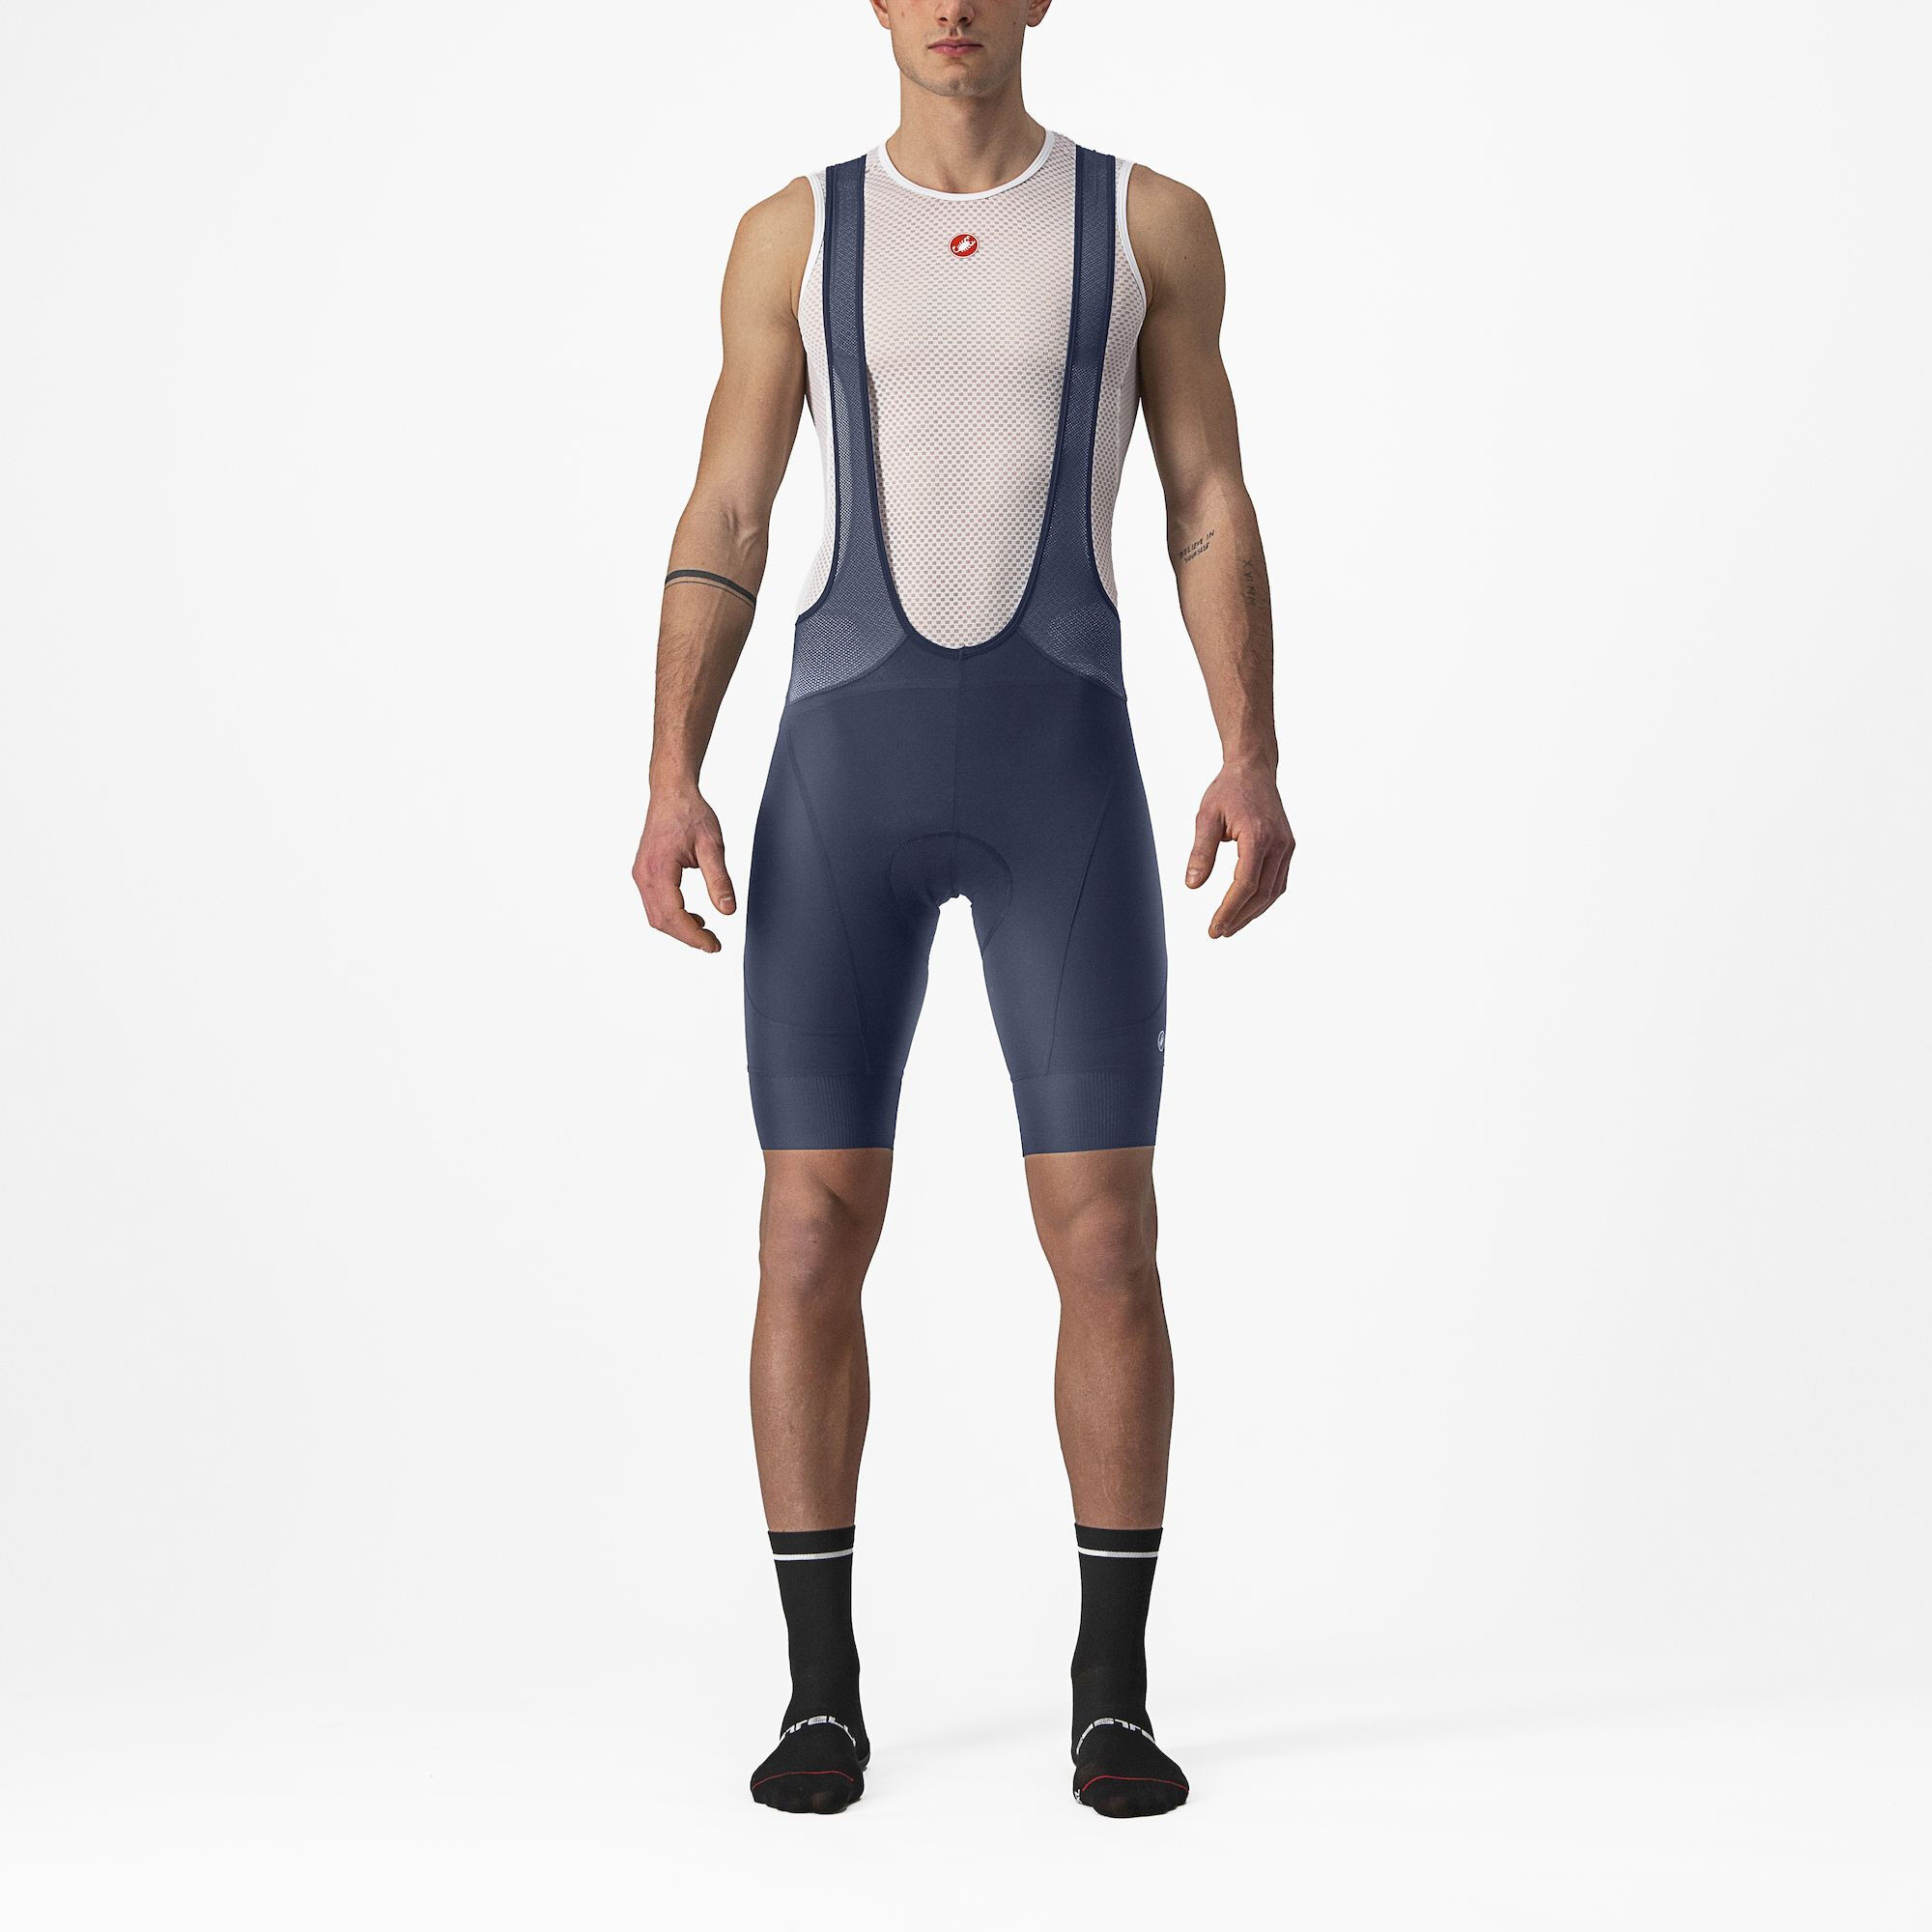 Castelli Endurance 3 Bibshort - Cycling shorts - Men's